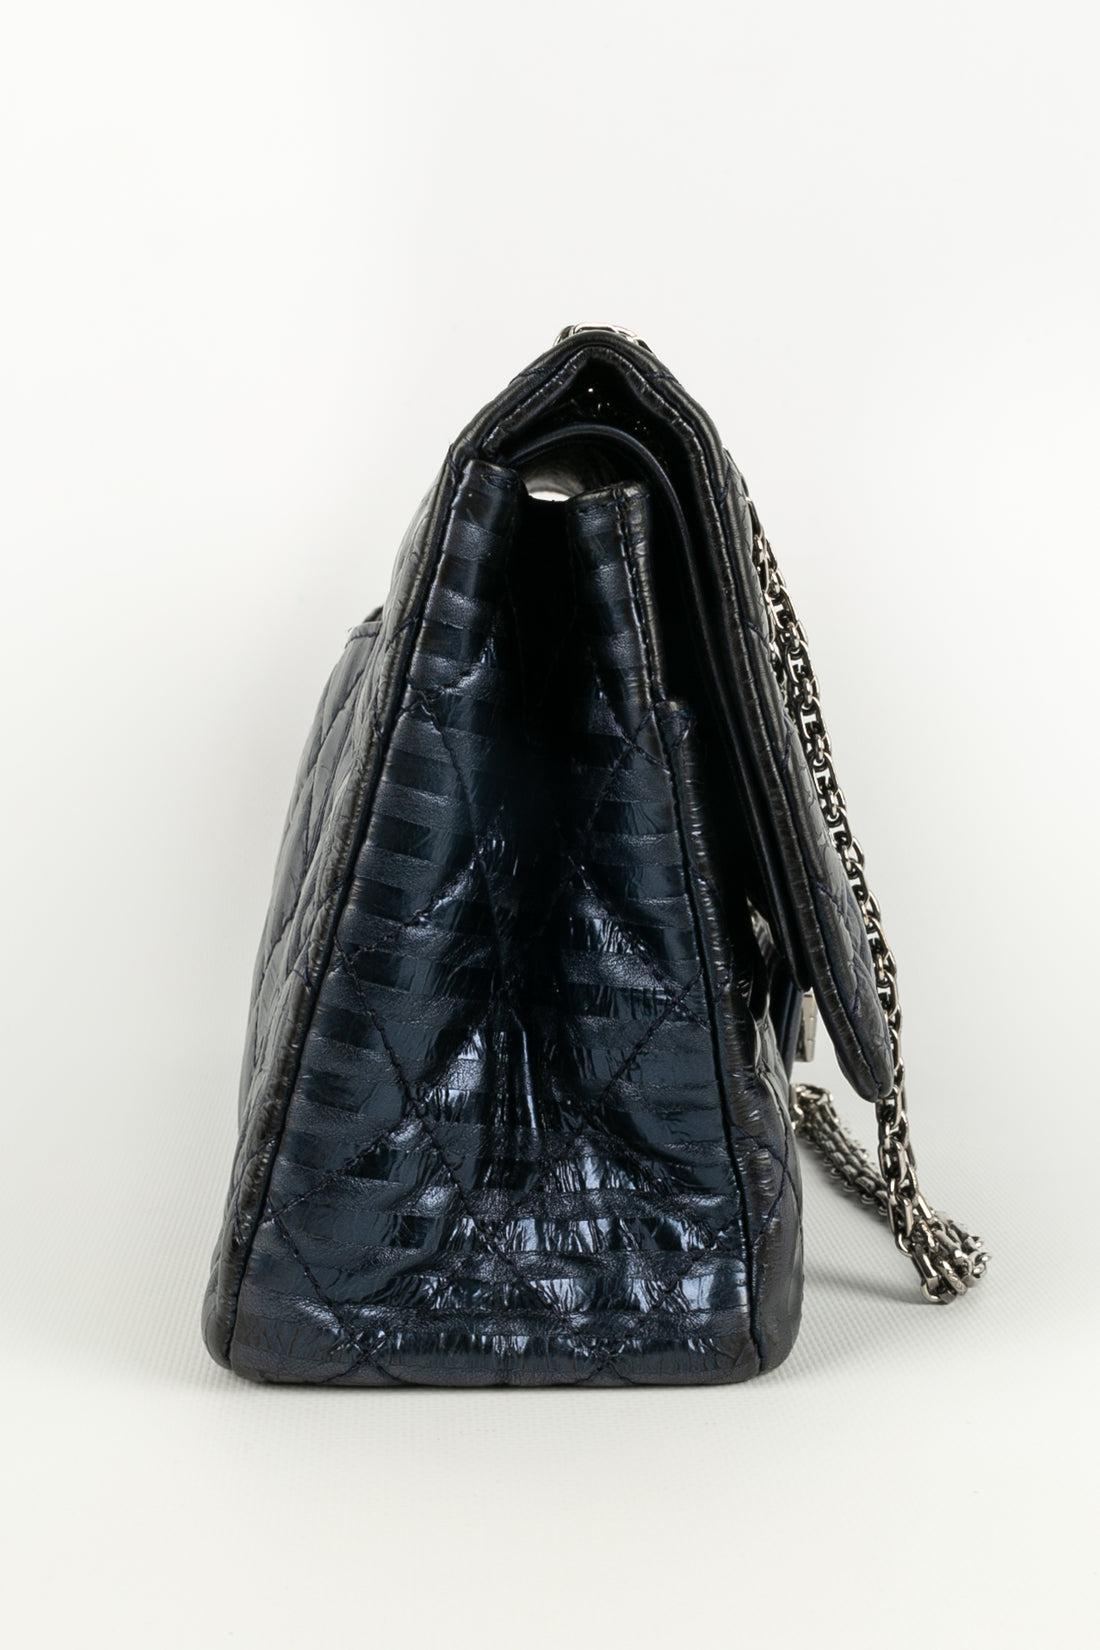 Women's Chanel Blue Metallic Leather Bag, 2008/09